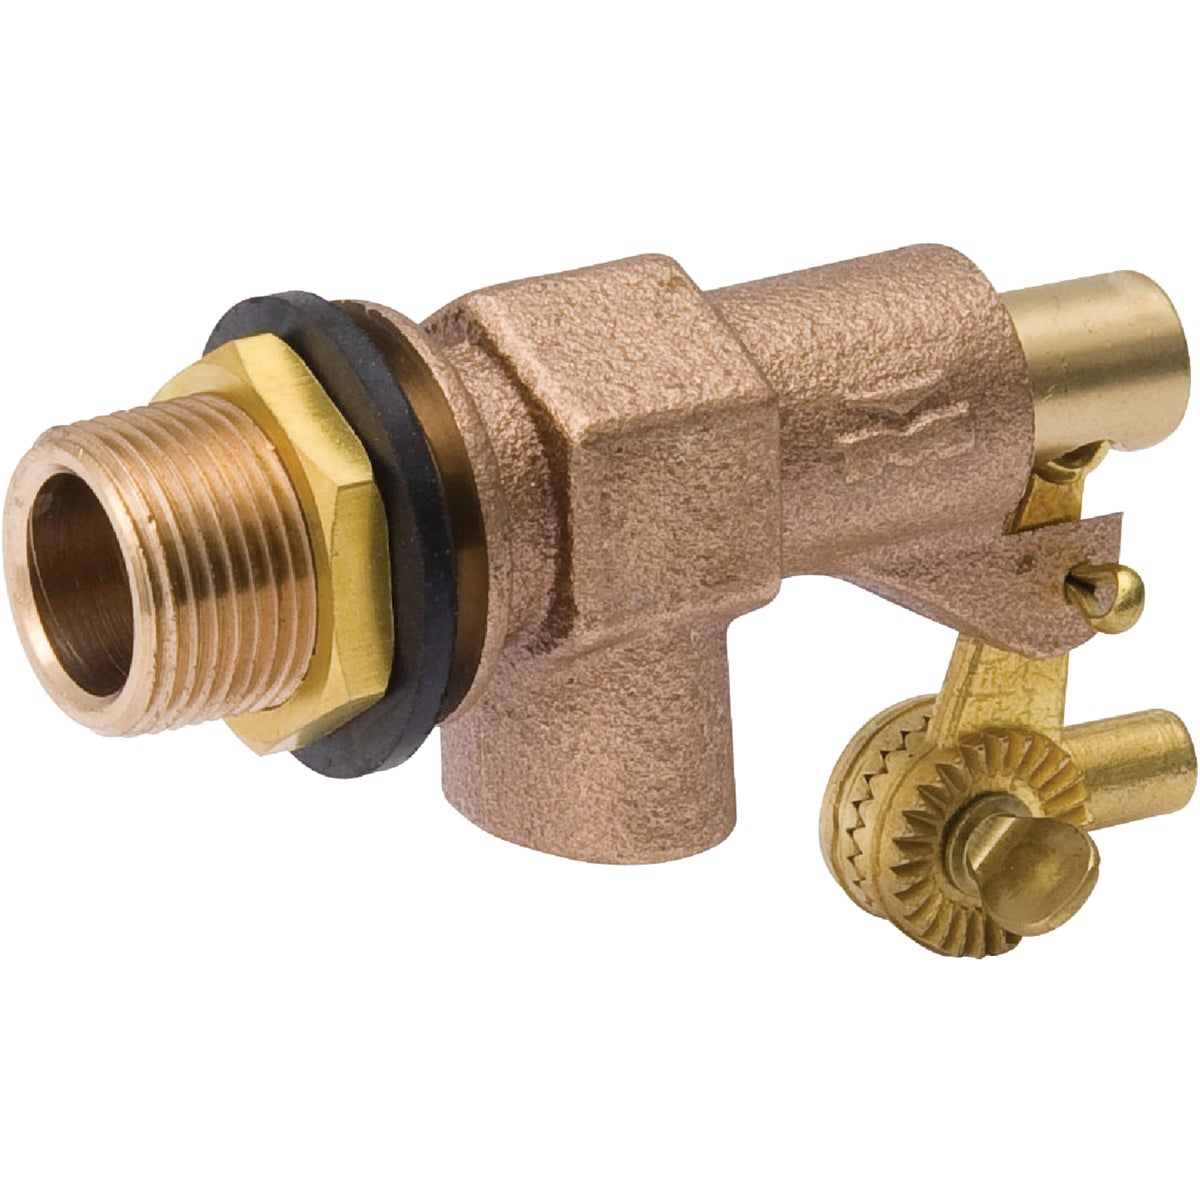 Item 404443, Bronze float valve. Female inlet - plain outlet.